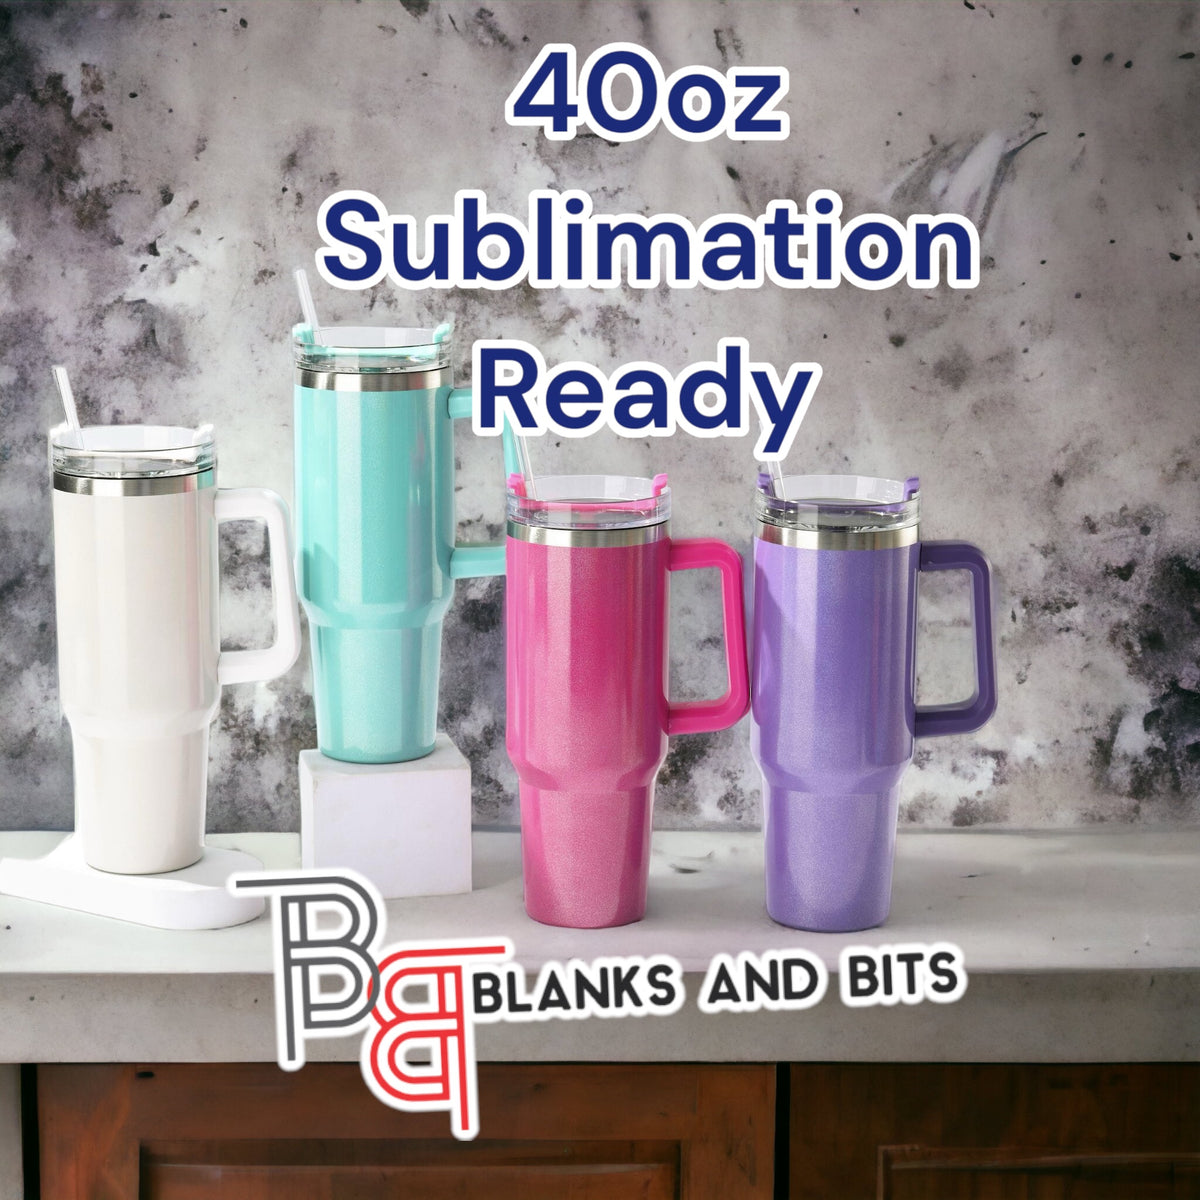 Print Sublimation 40oz Tumbler? Meet New 2 IN 1 V3.0 Max Tumbler